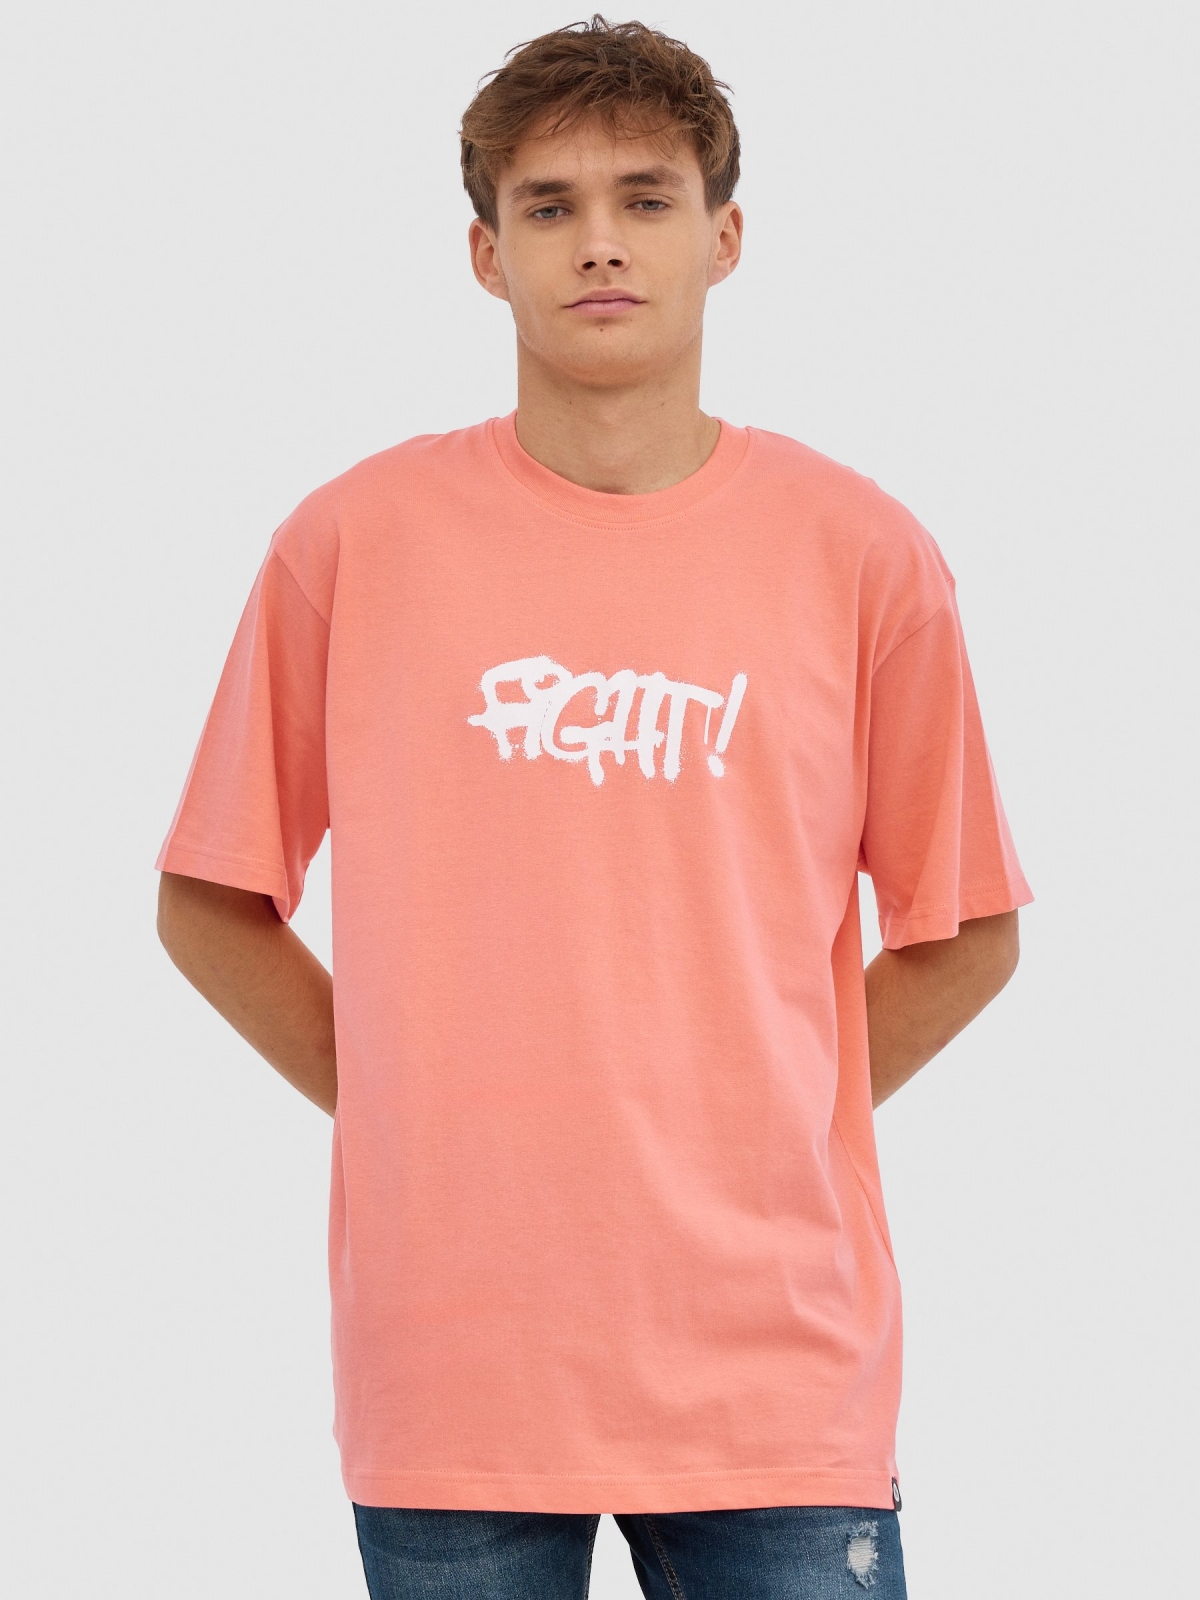 T-shirt "Fight!" rosa vista meia frontal